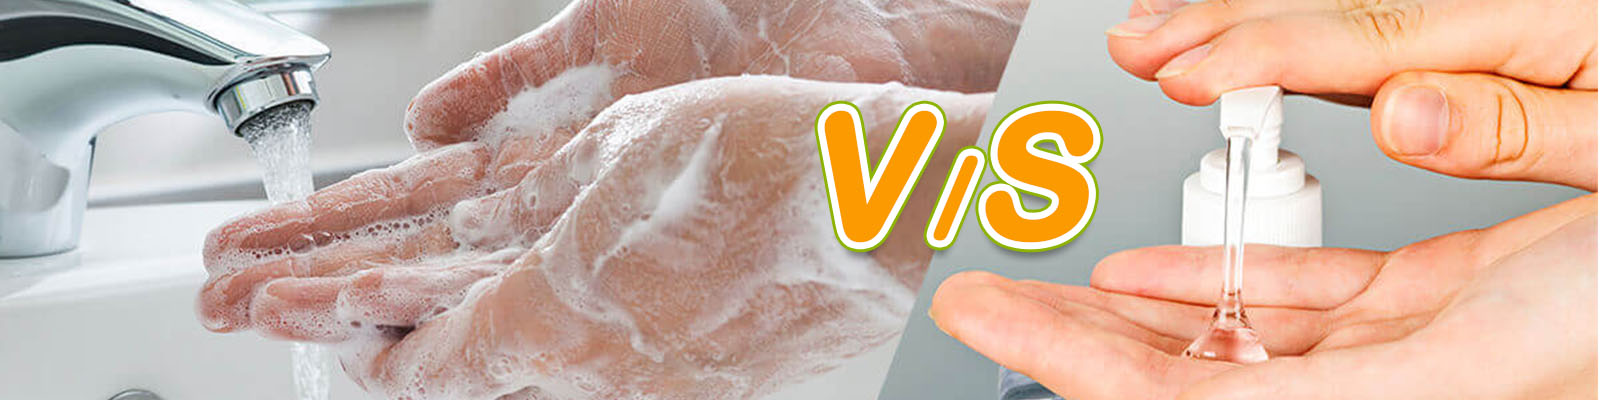 Hand Sanitizer or Soap